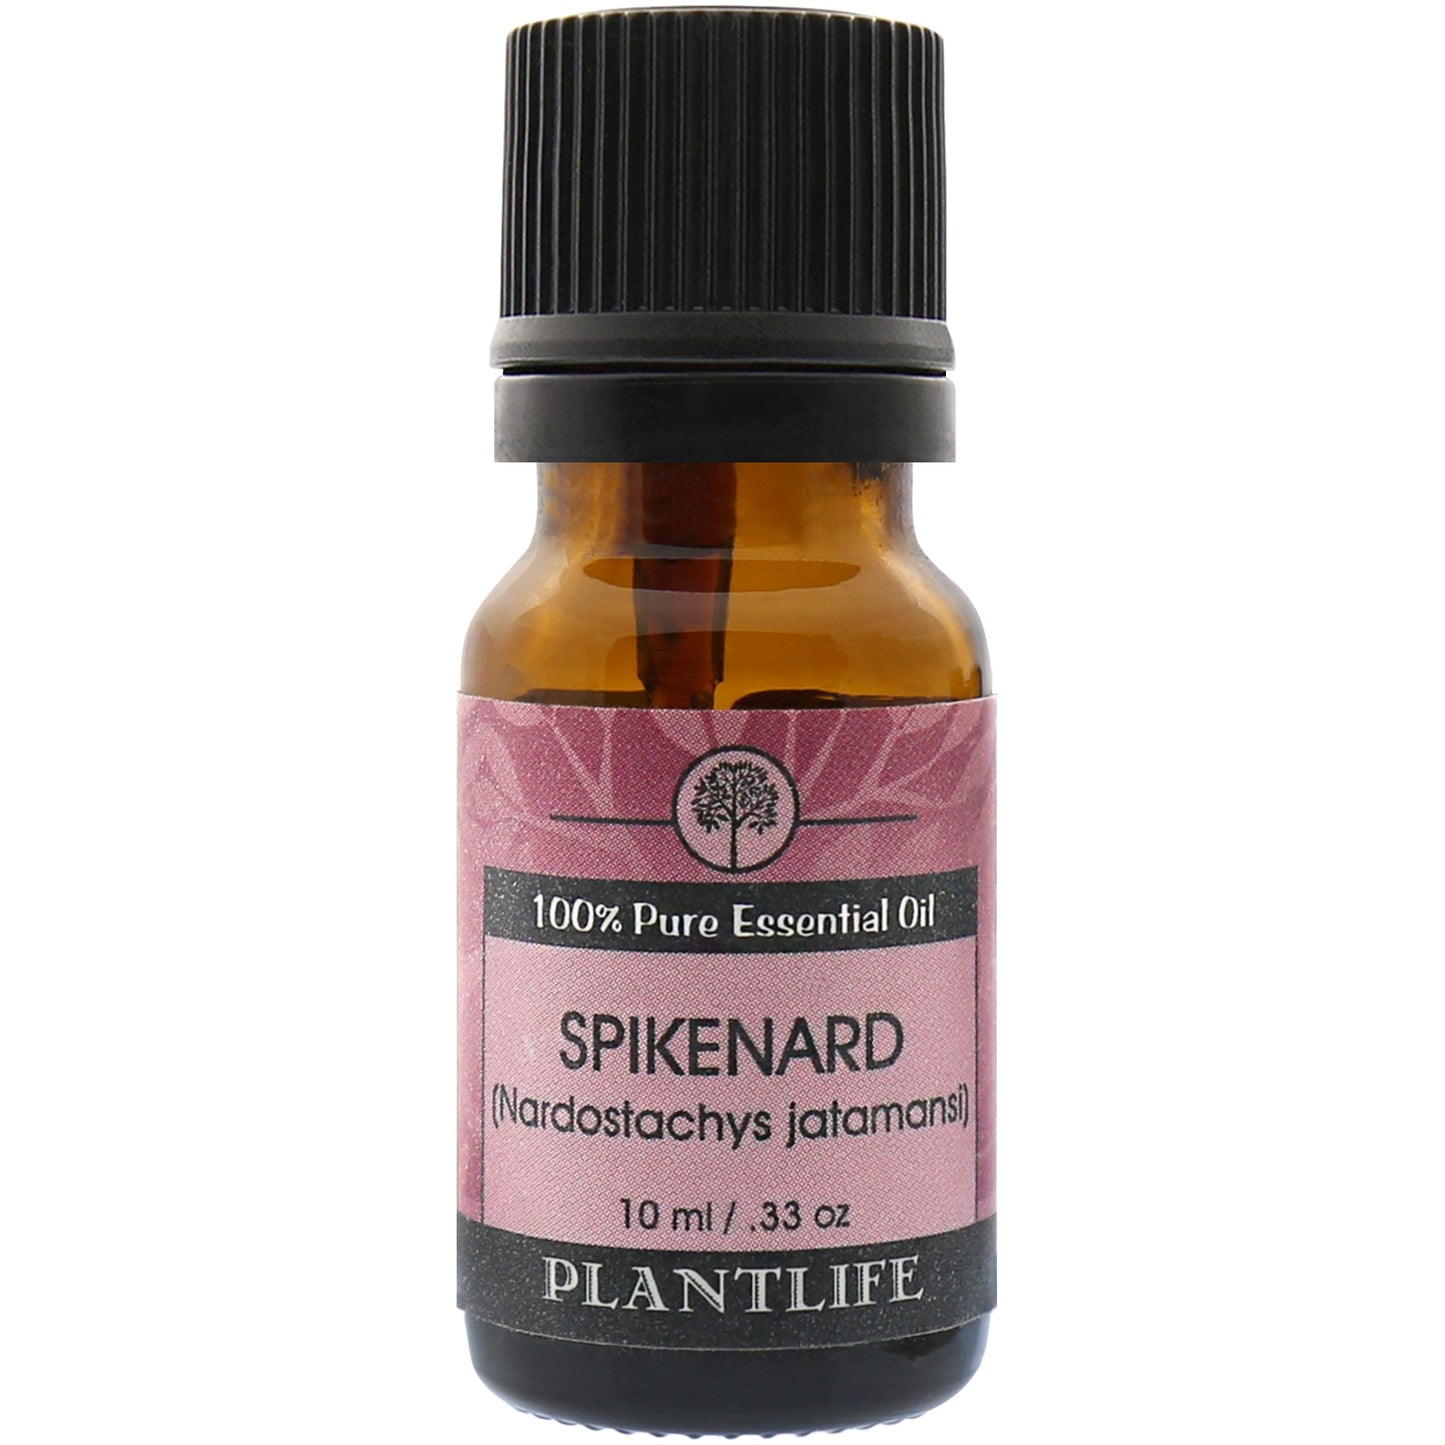 Myrrh 100% Pure Therapeutic Grade Essential Oil by Edens Garden- 10 ml